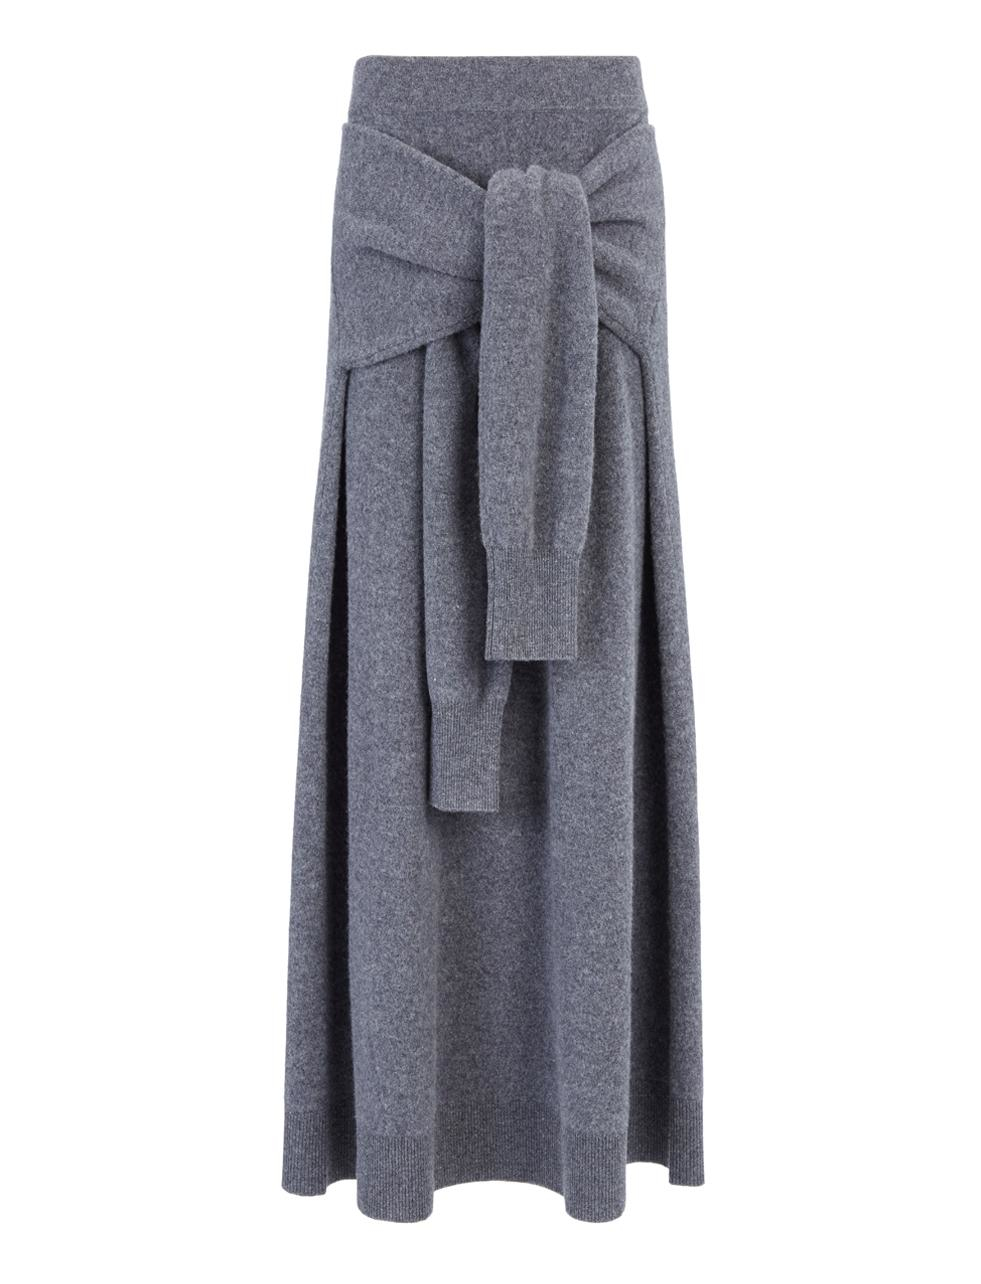 Joseph Soft Wool Knot Skirt in Gray | Lyst